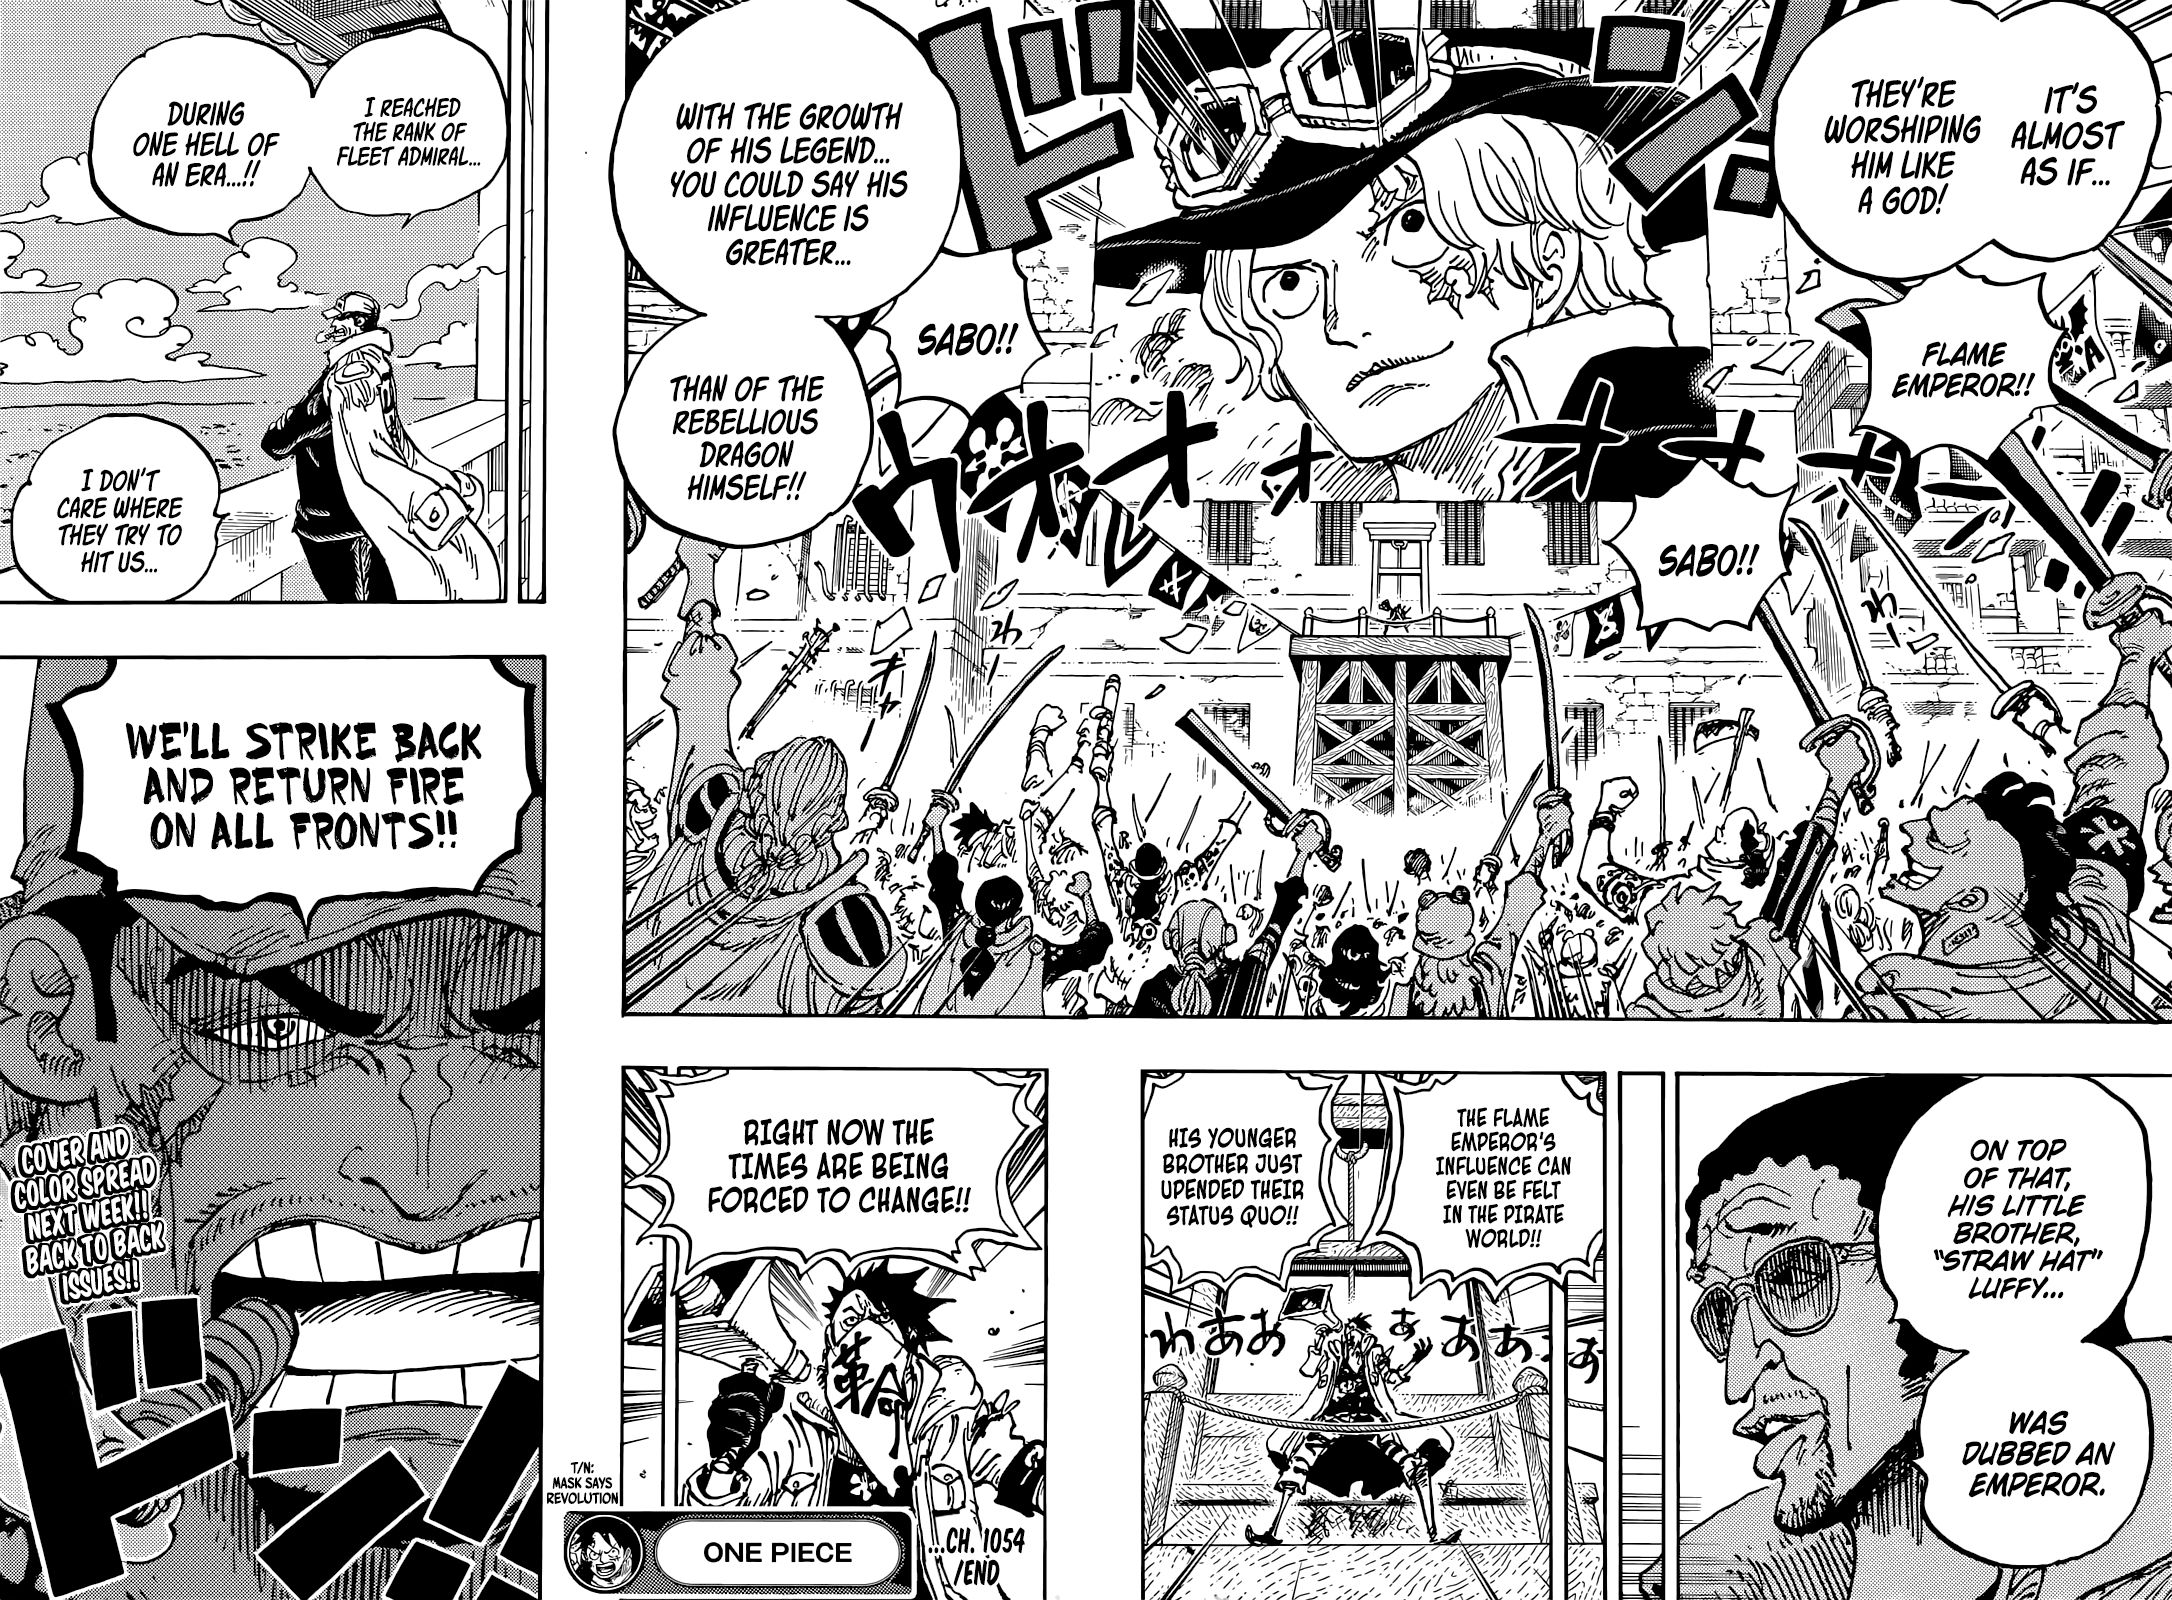 One Piece Returns From Hiatus With Explosive Declaration of War